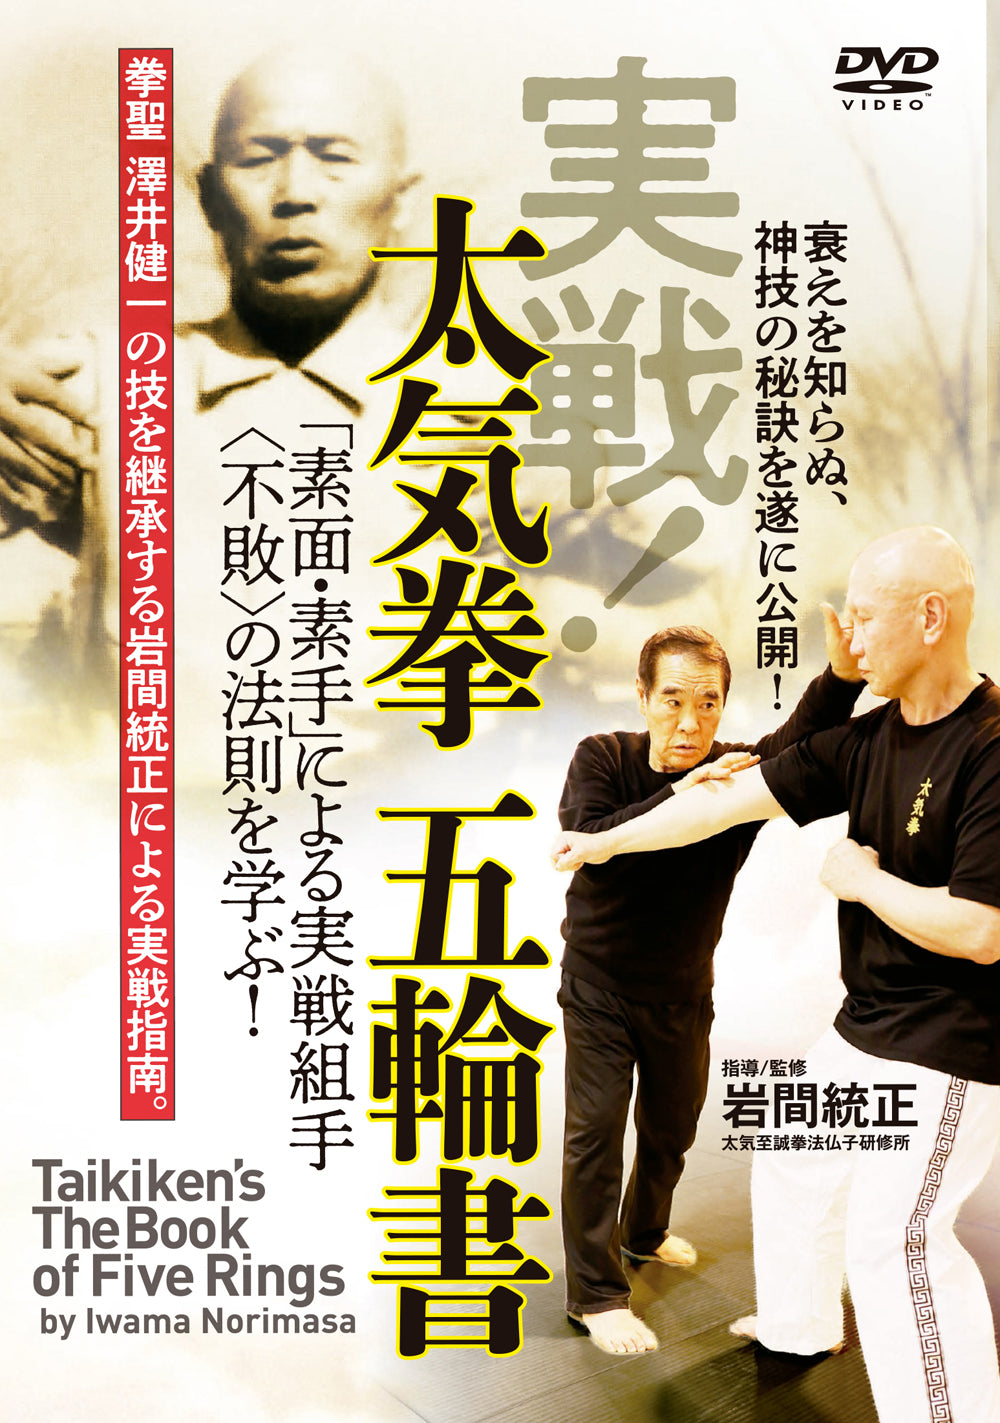 Takiken Libro de los 5 anillos DVD de Norimasa Iwama